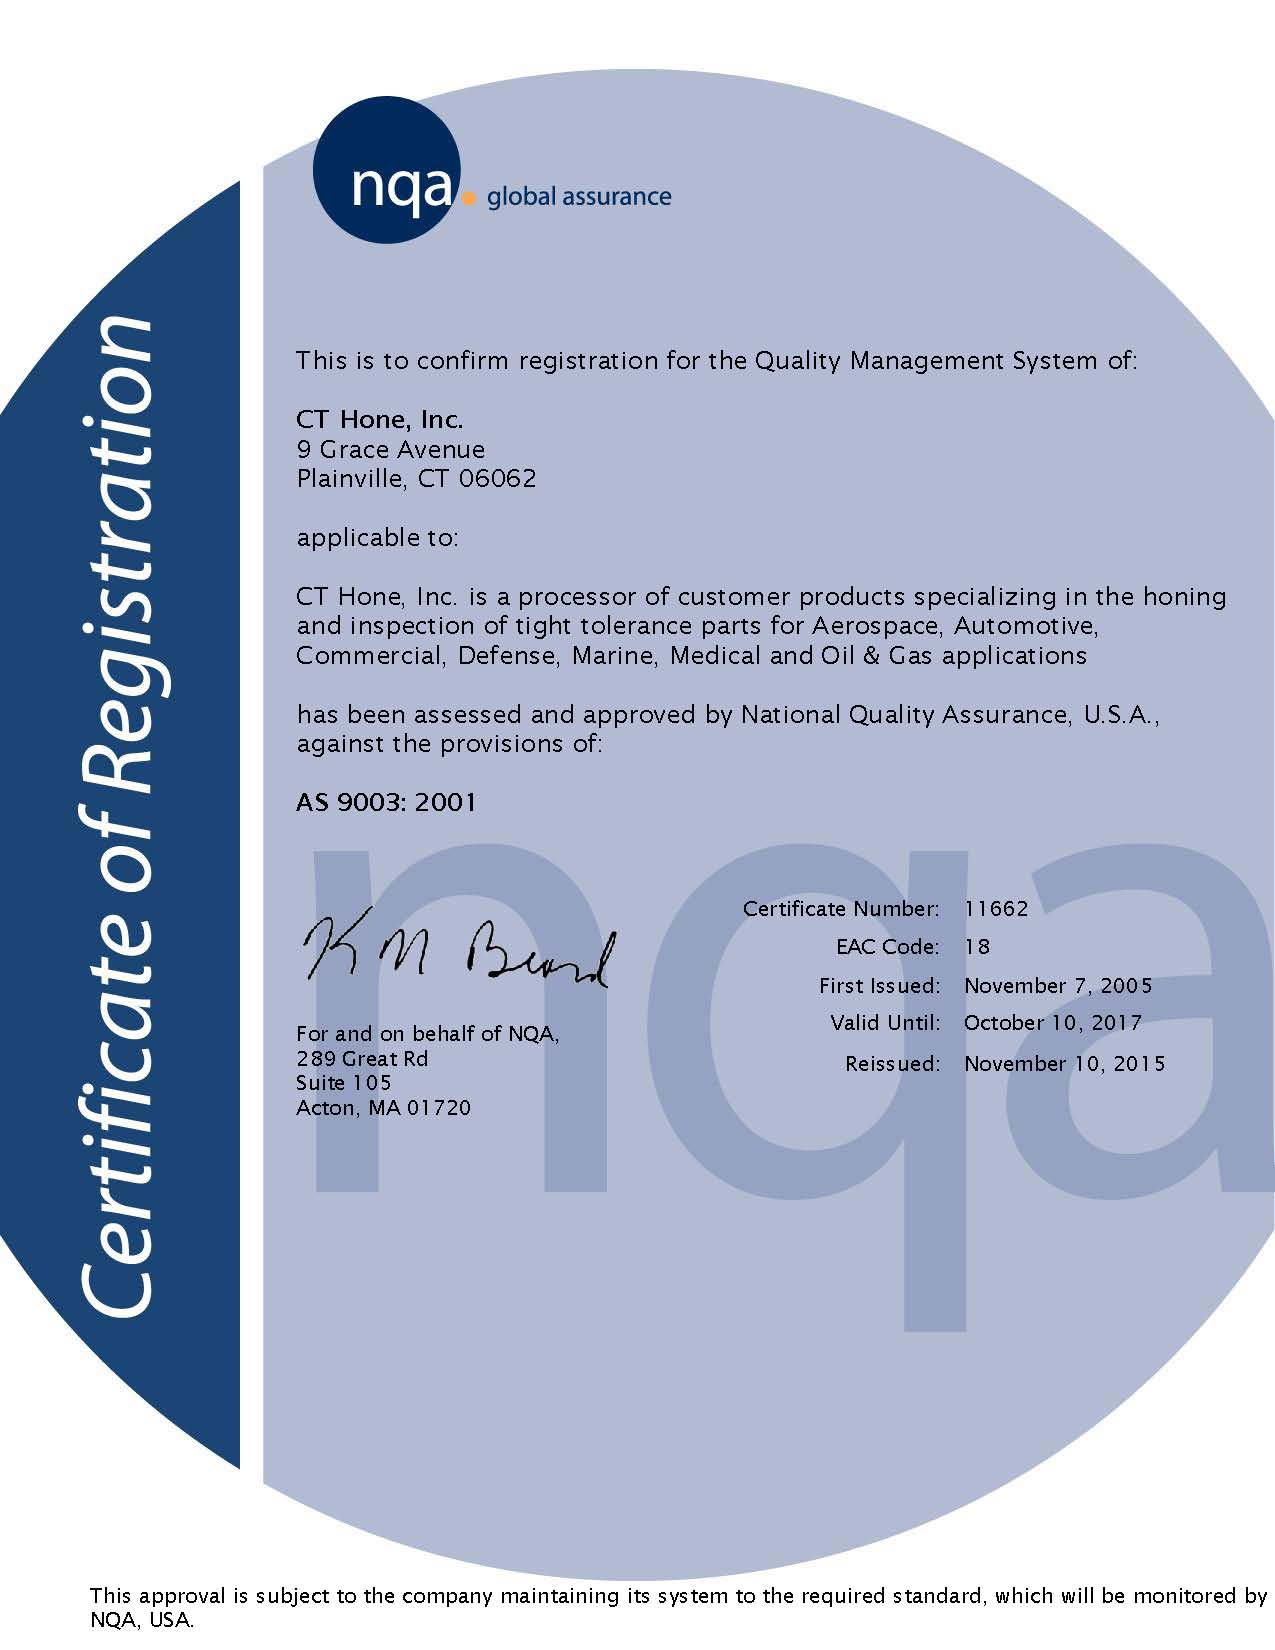 AS 9003:2012 Certificate